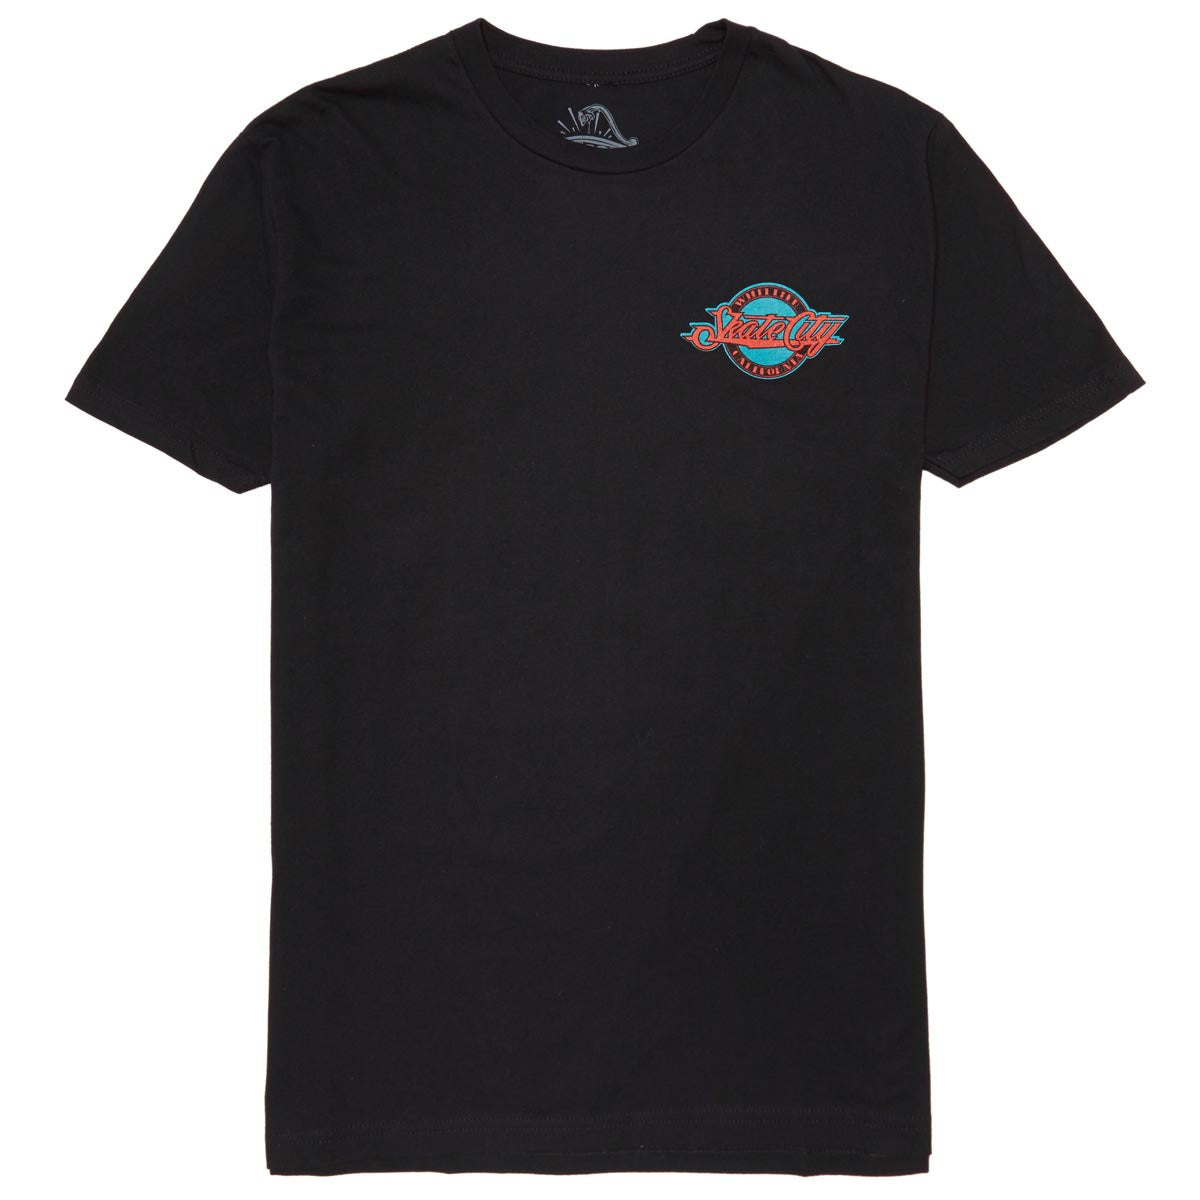 45RPM Vintage Skate City Skatepark T-Shirt - Black image 2